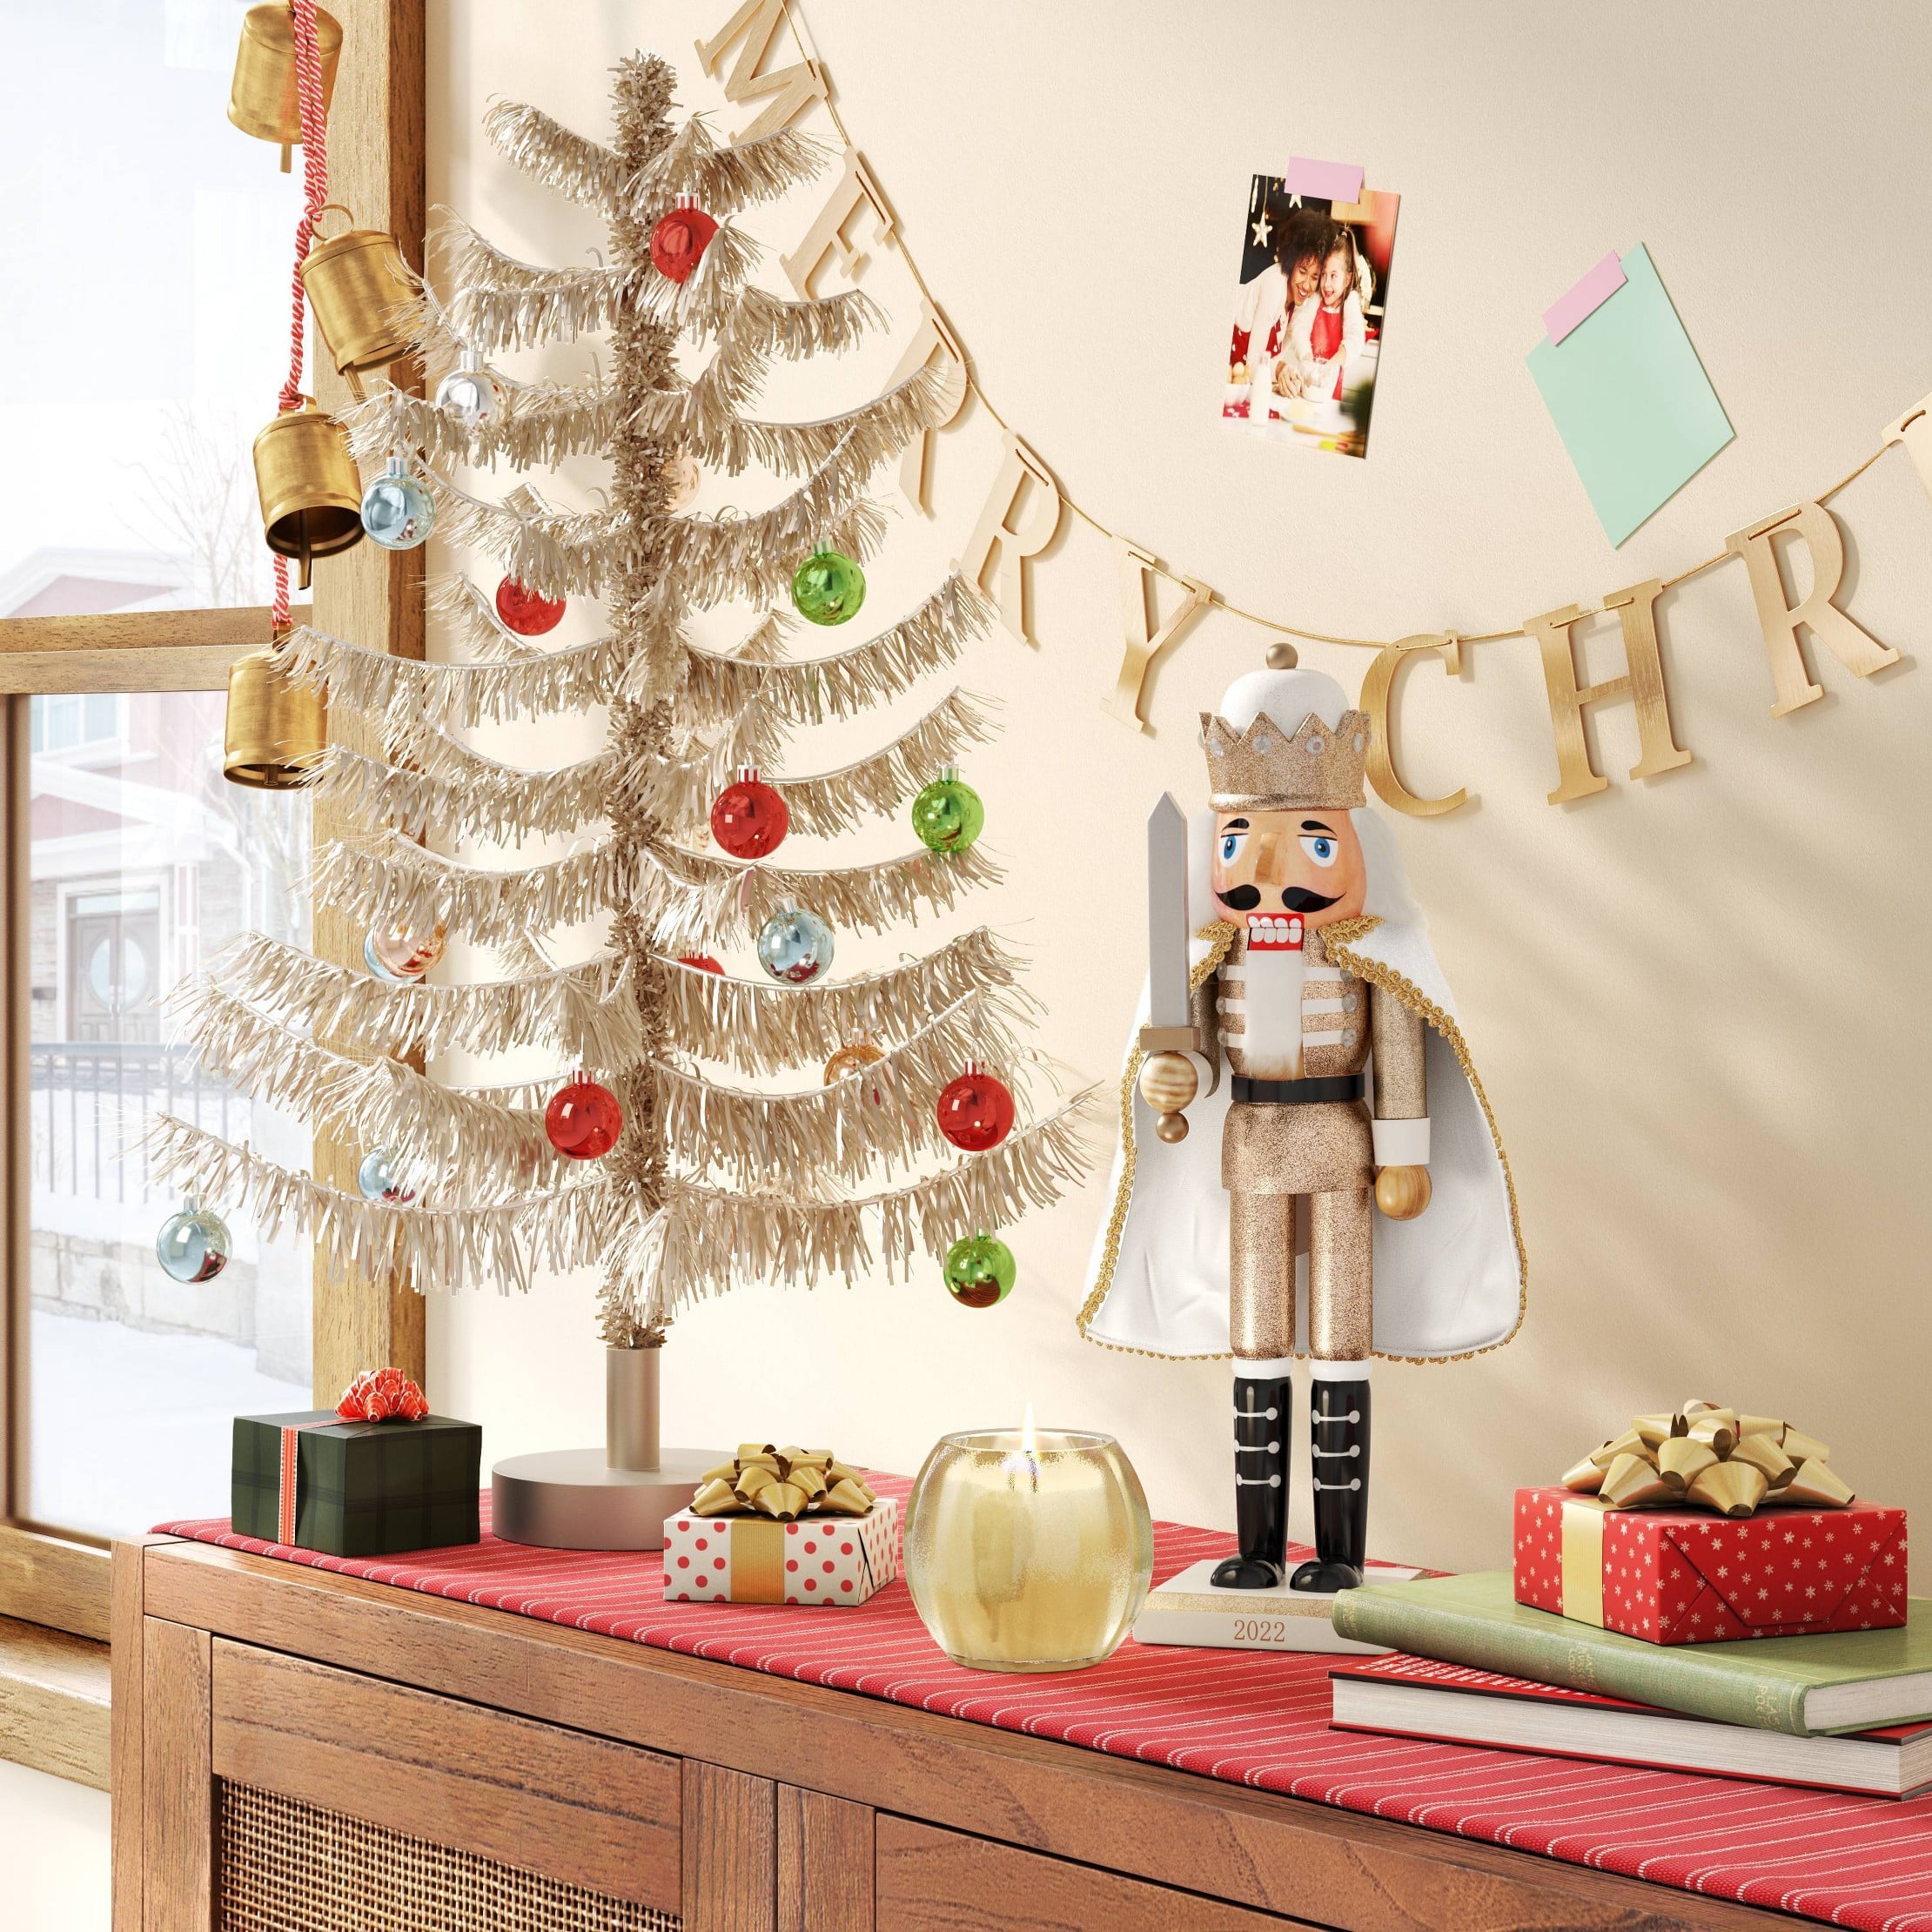 DIY Holiday Flat Stanley Ornaments 